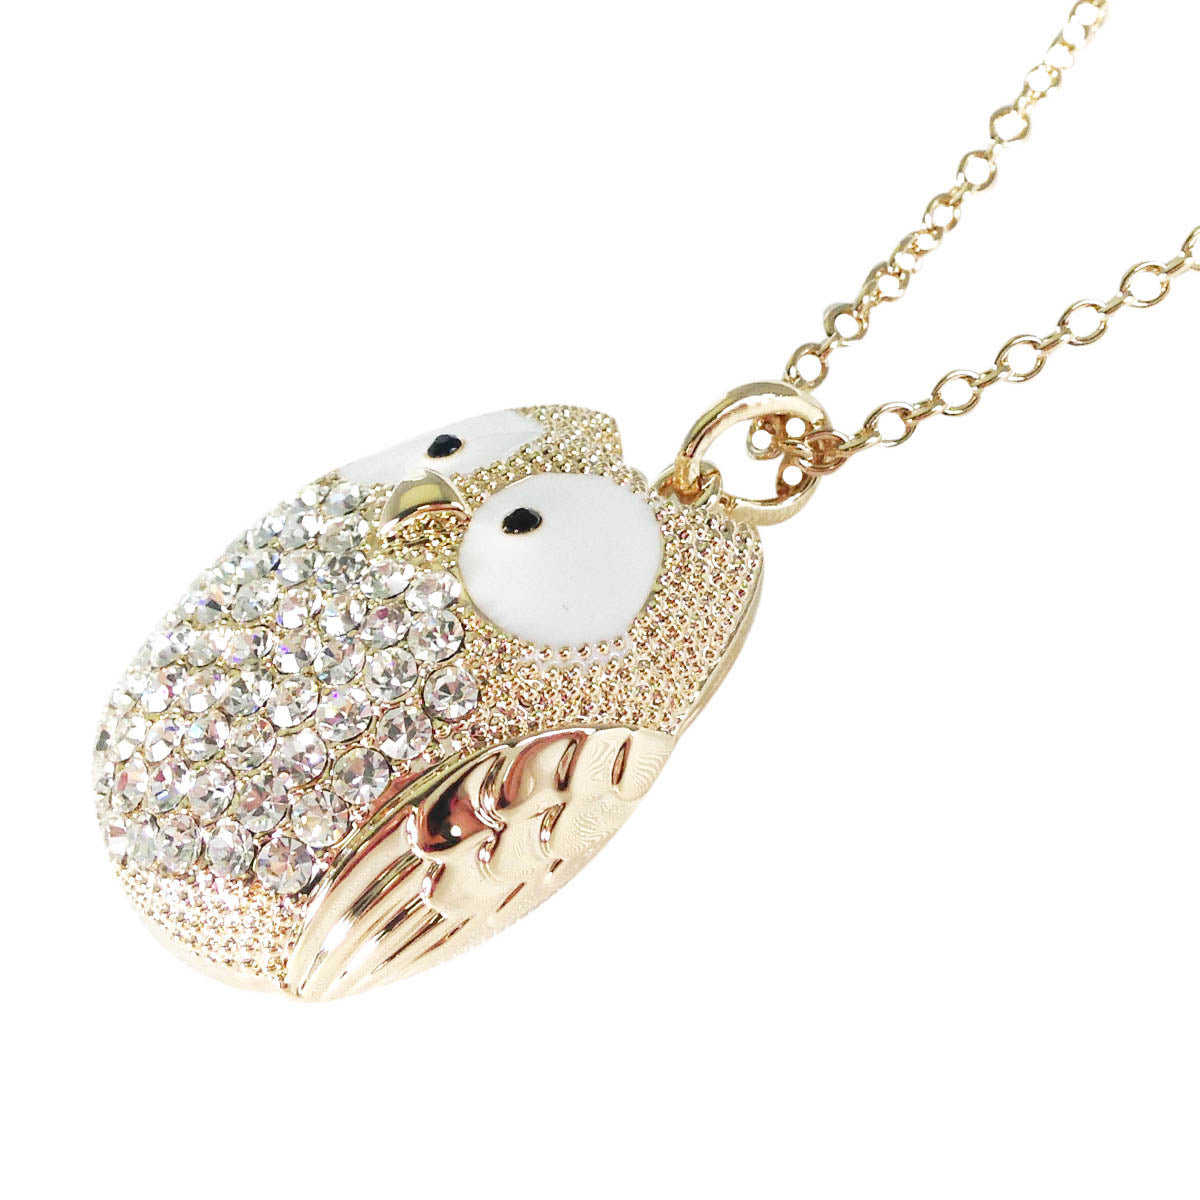 Rhinestone Studded Snowy Owl Pendant Necklace